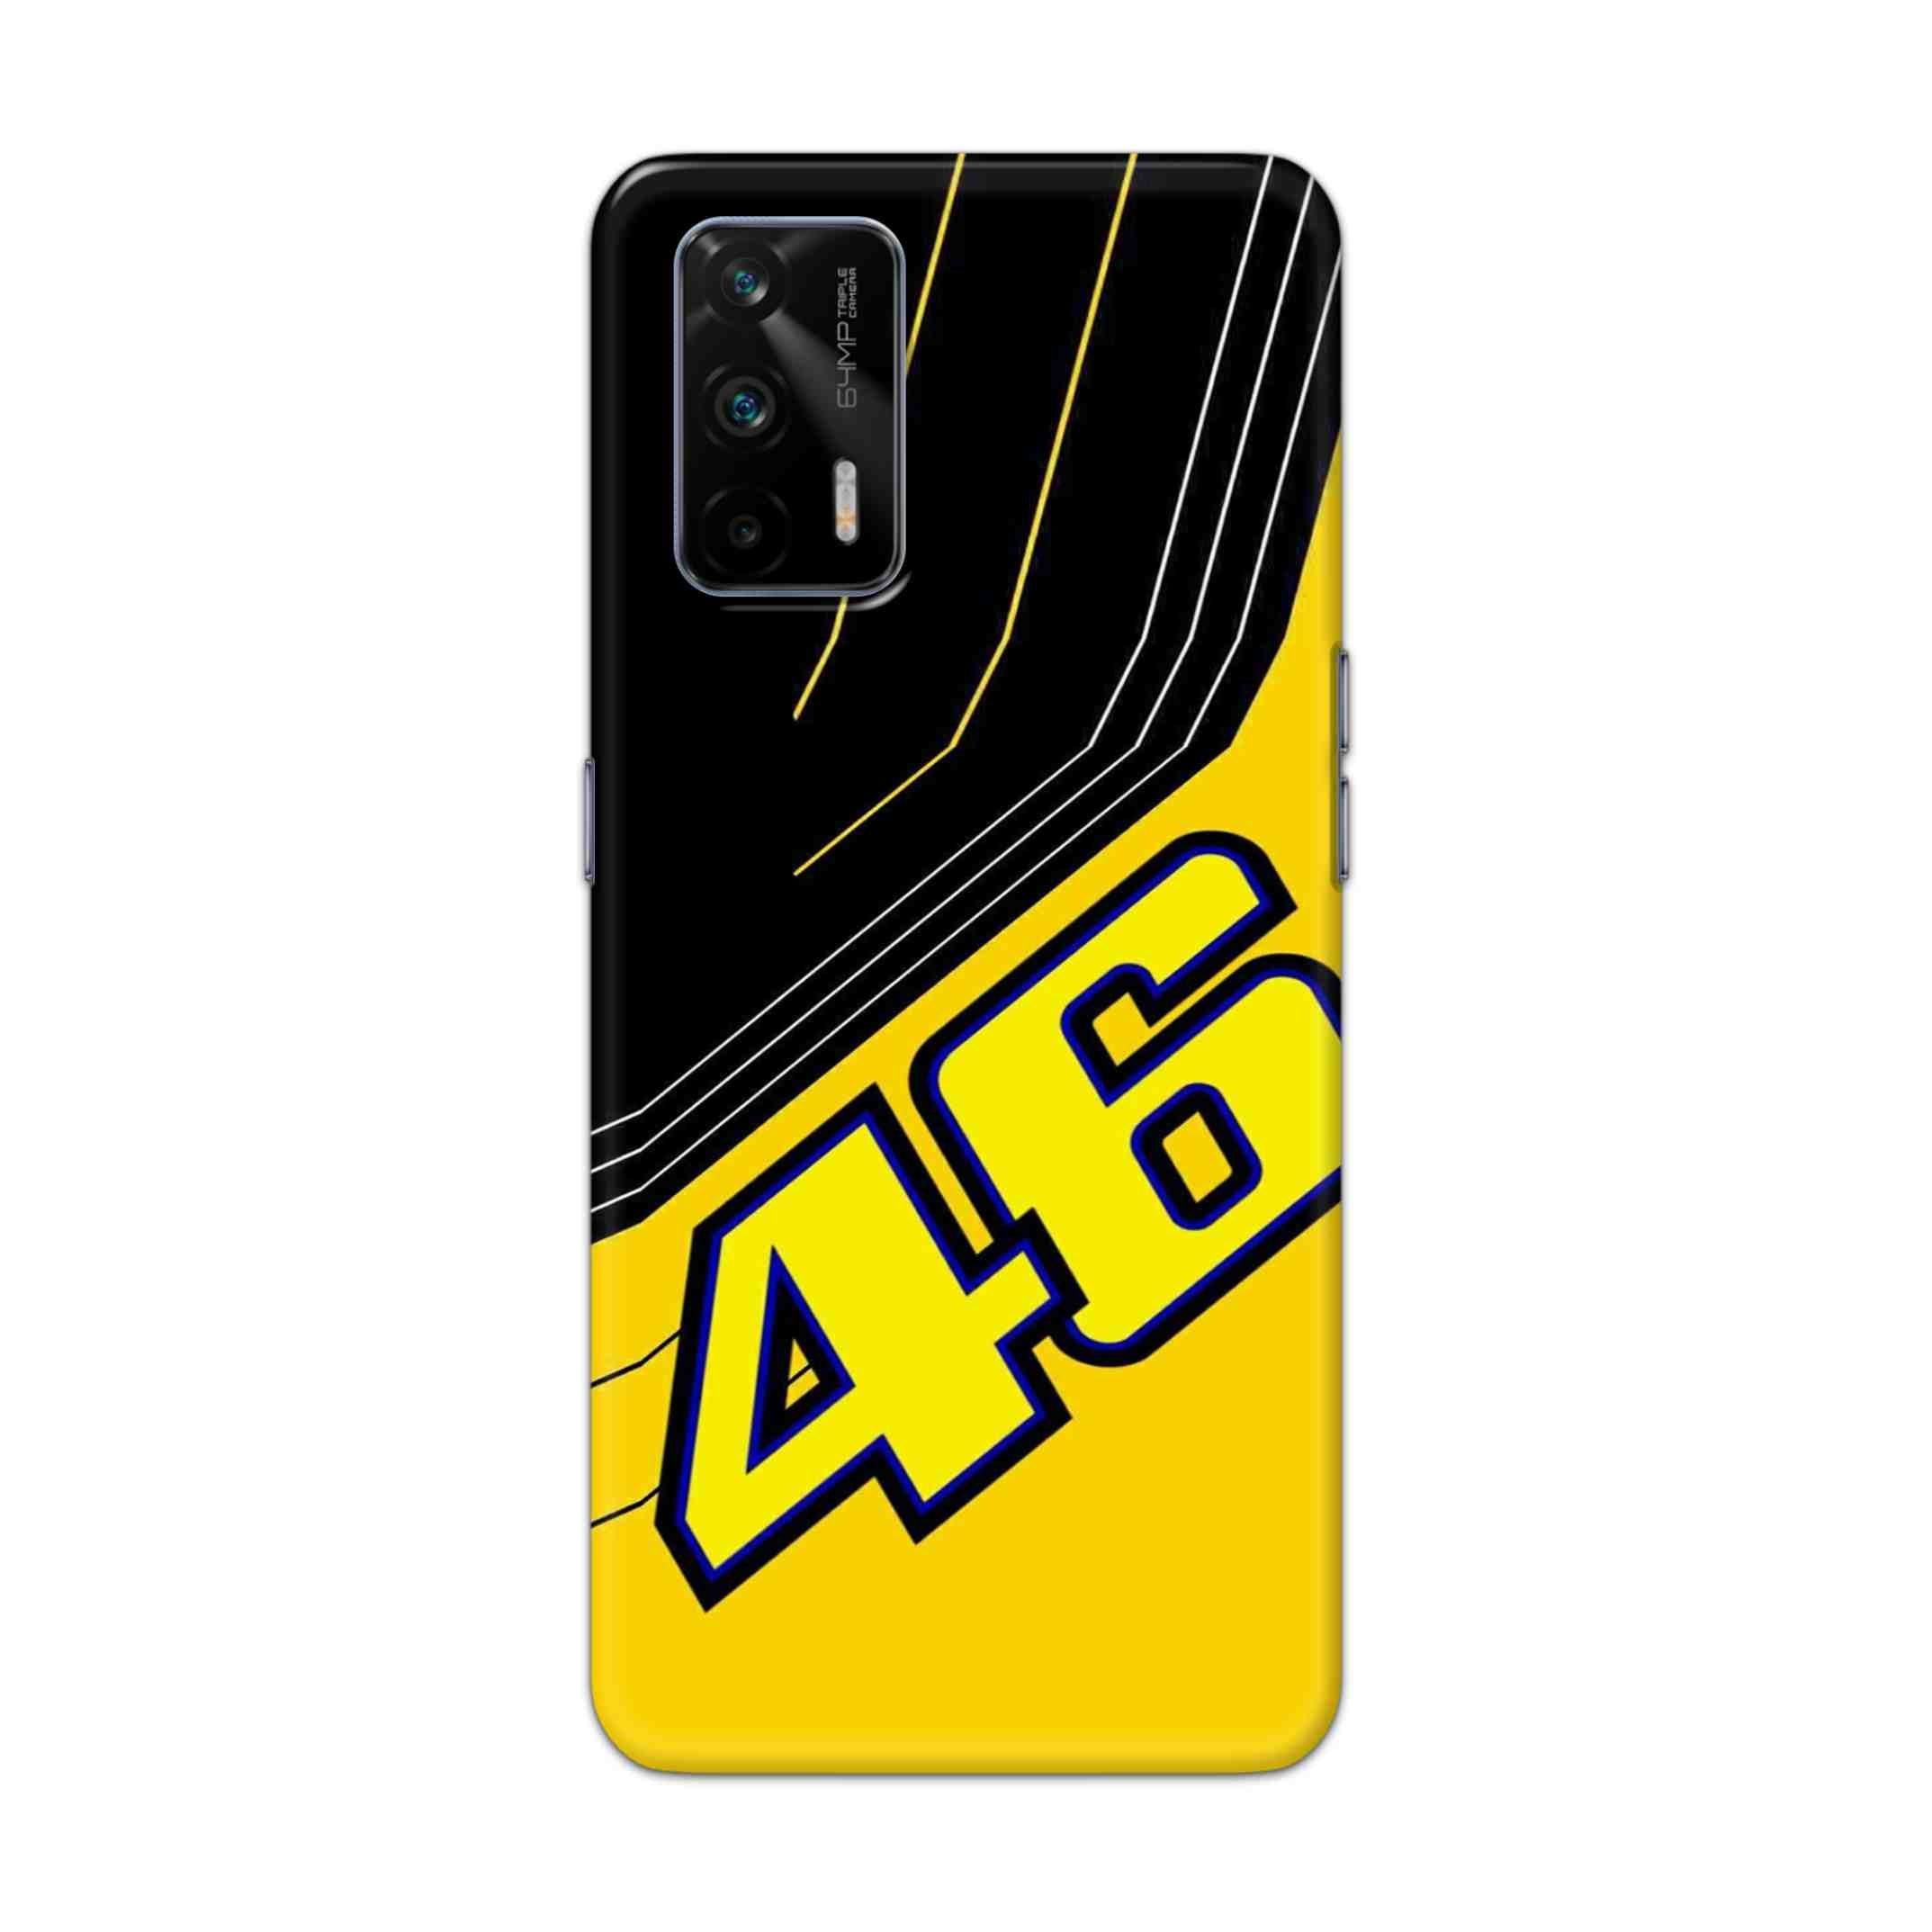 Buy 46 Hard Back Mobile Phone Case Cover For Realme GT 5G Online